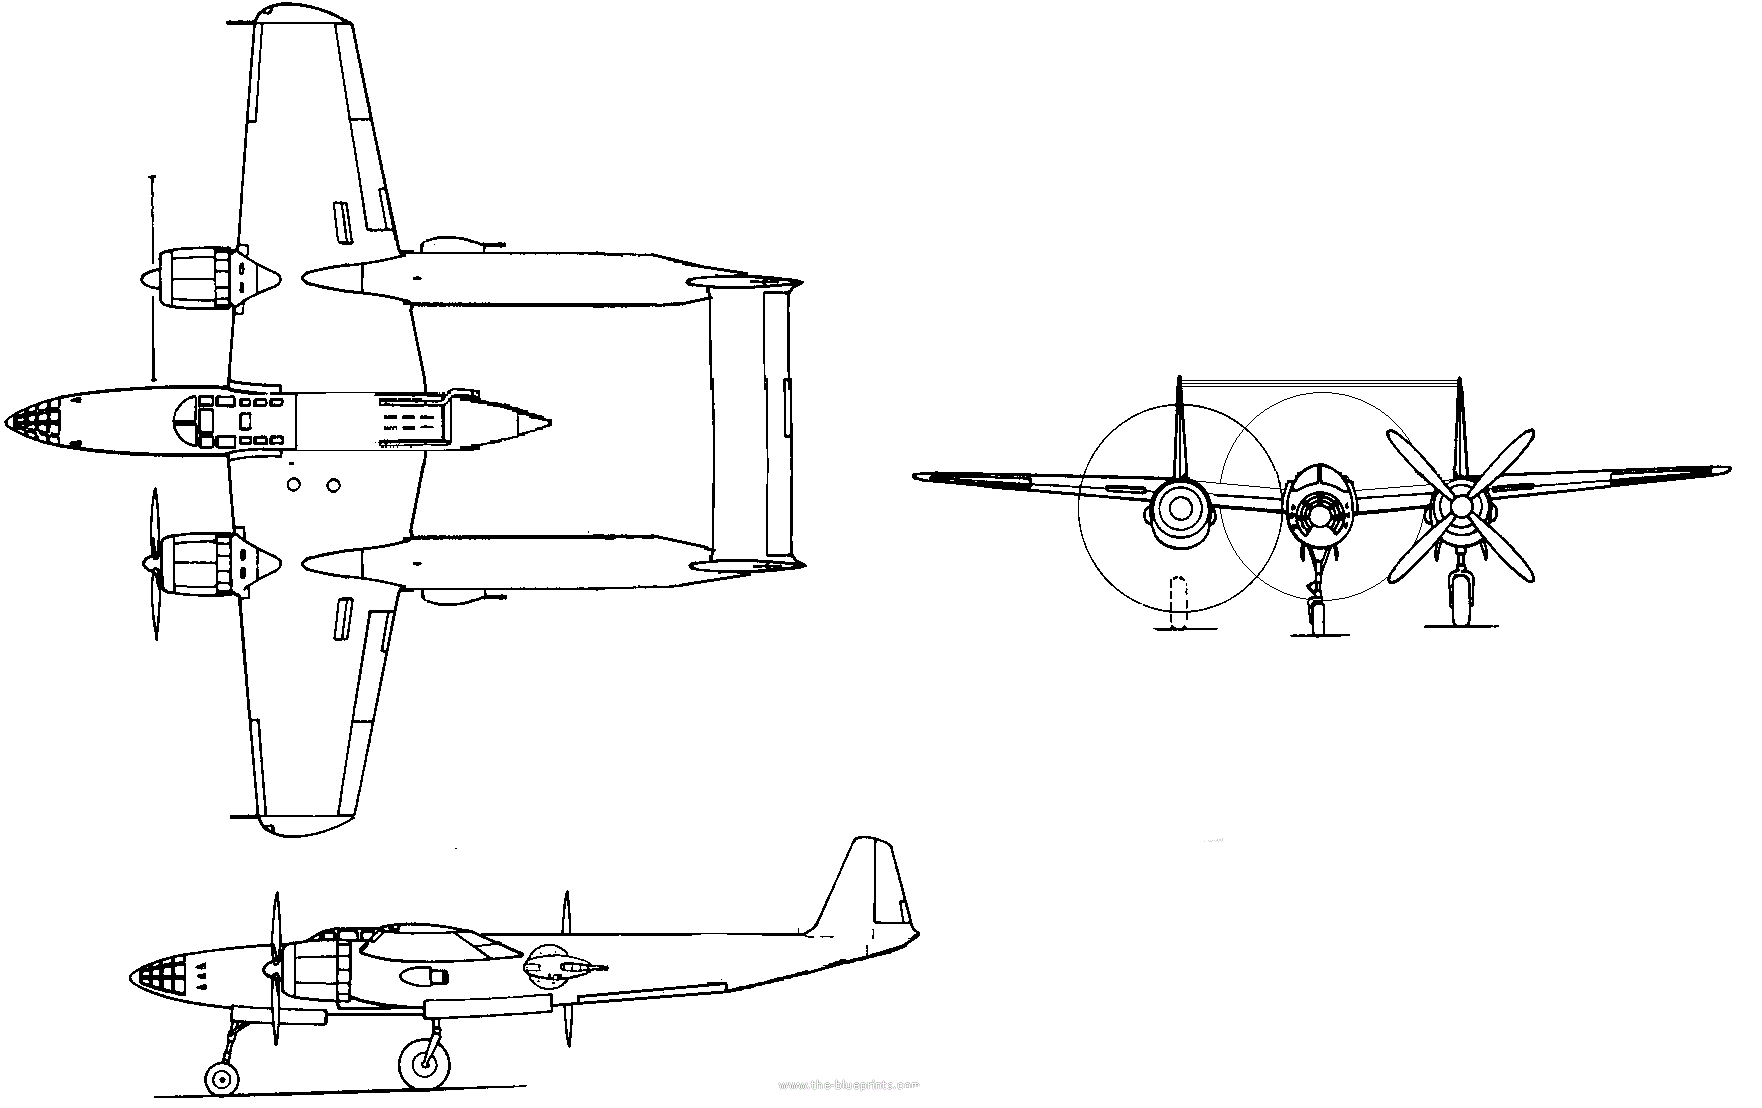 Hughes HB-11 Thunderbird - Inline pusher.gif